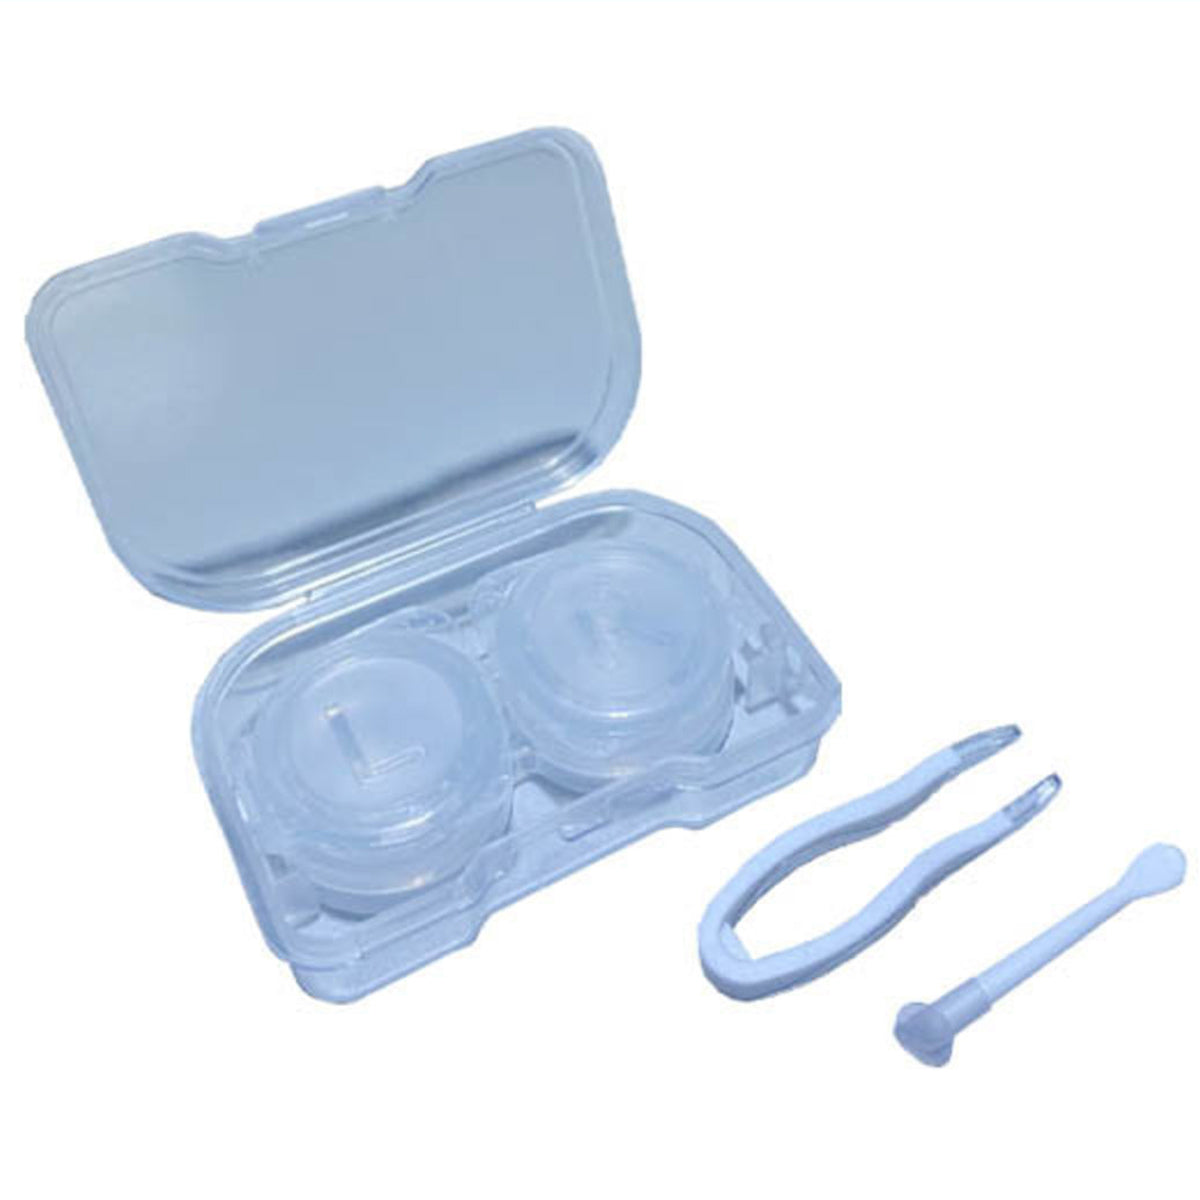 Basic model - contact lens case set